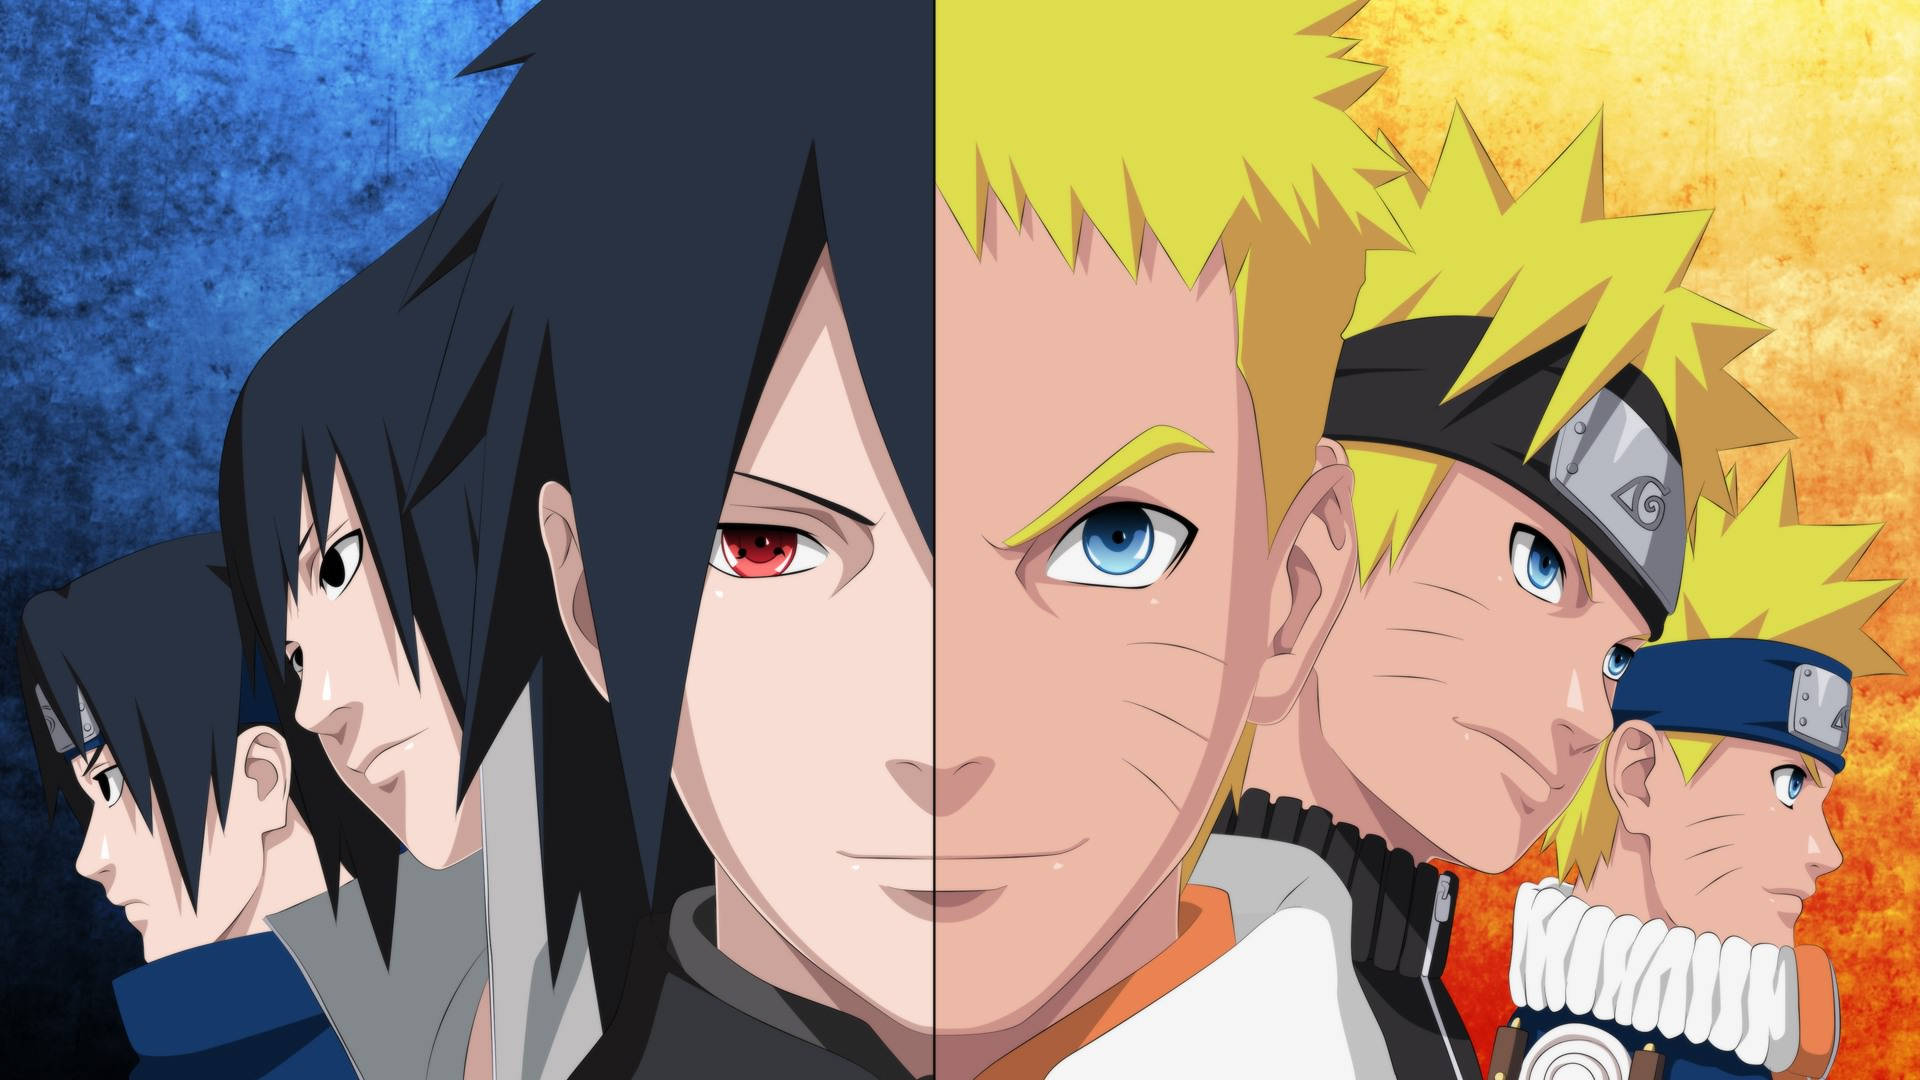 Naruto and Sasuke in their Sage Mode transformations Wallpaper